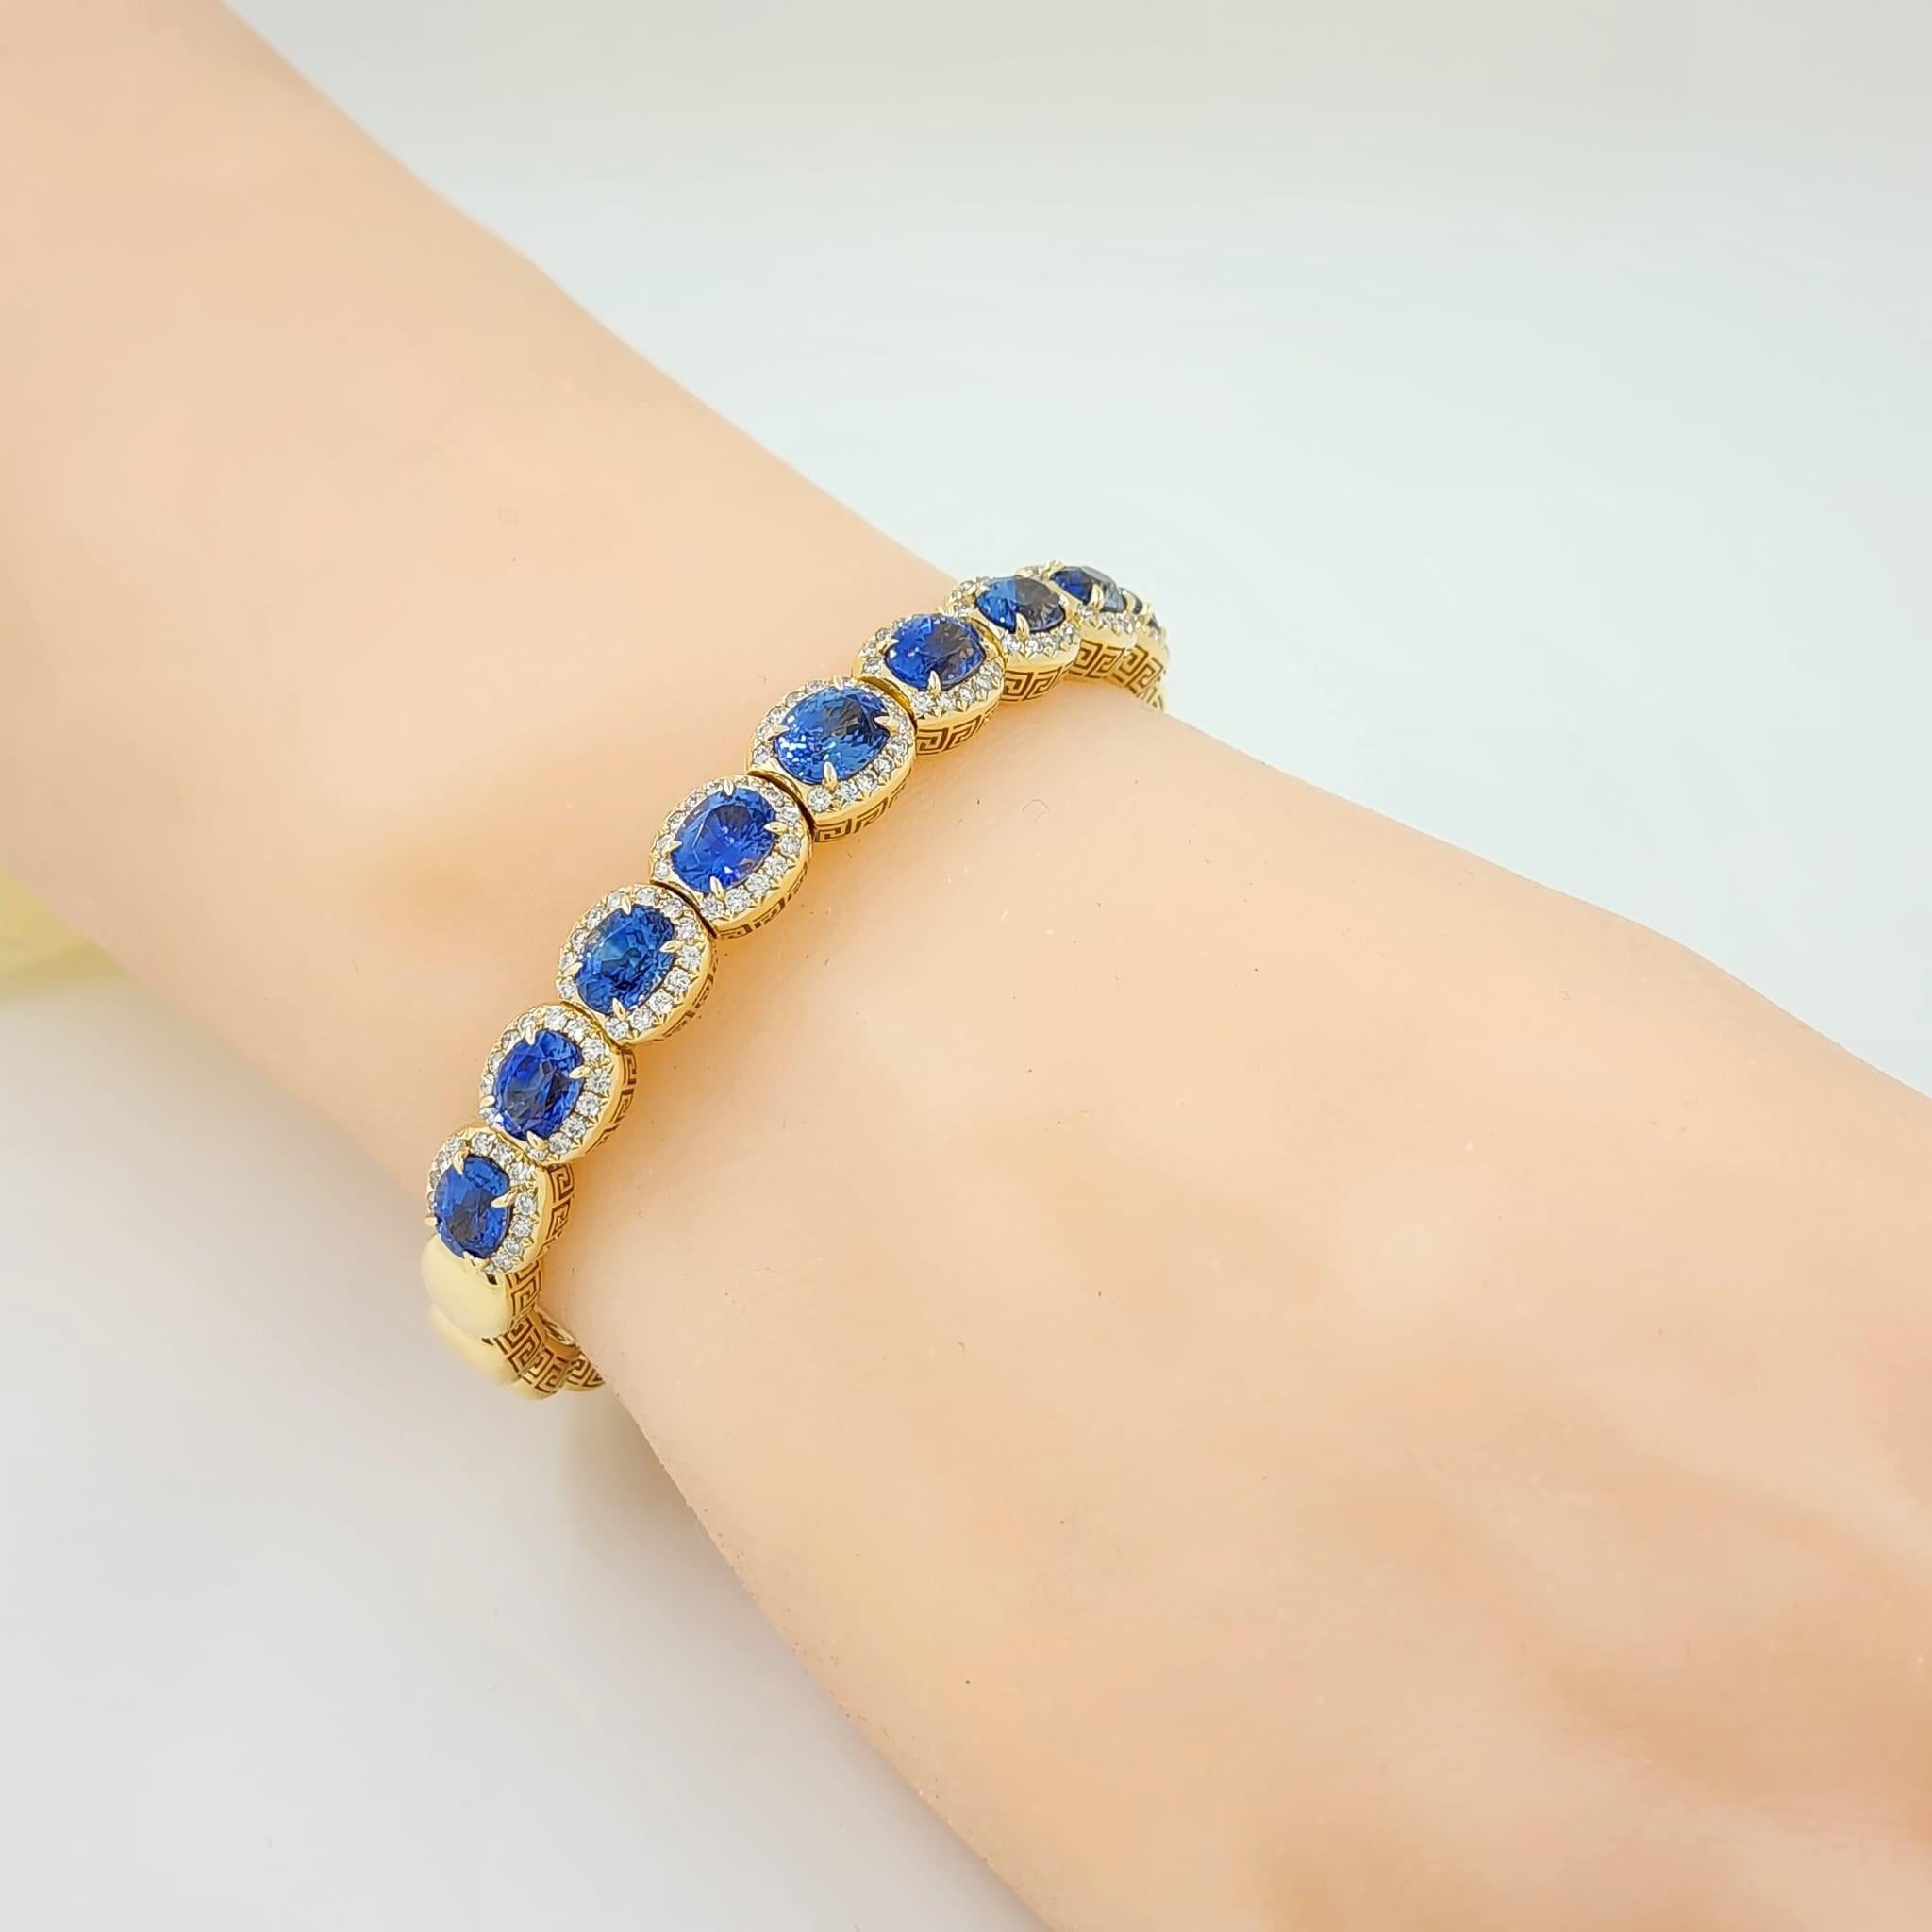 9.49 Carats Blue Sapphire Diamond Bangle Bracelet in 18 Karat Yellow Gold For Sale 1